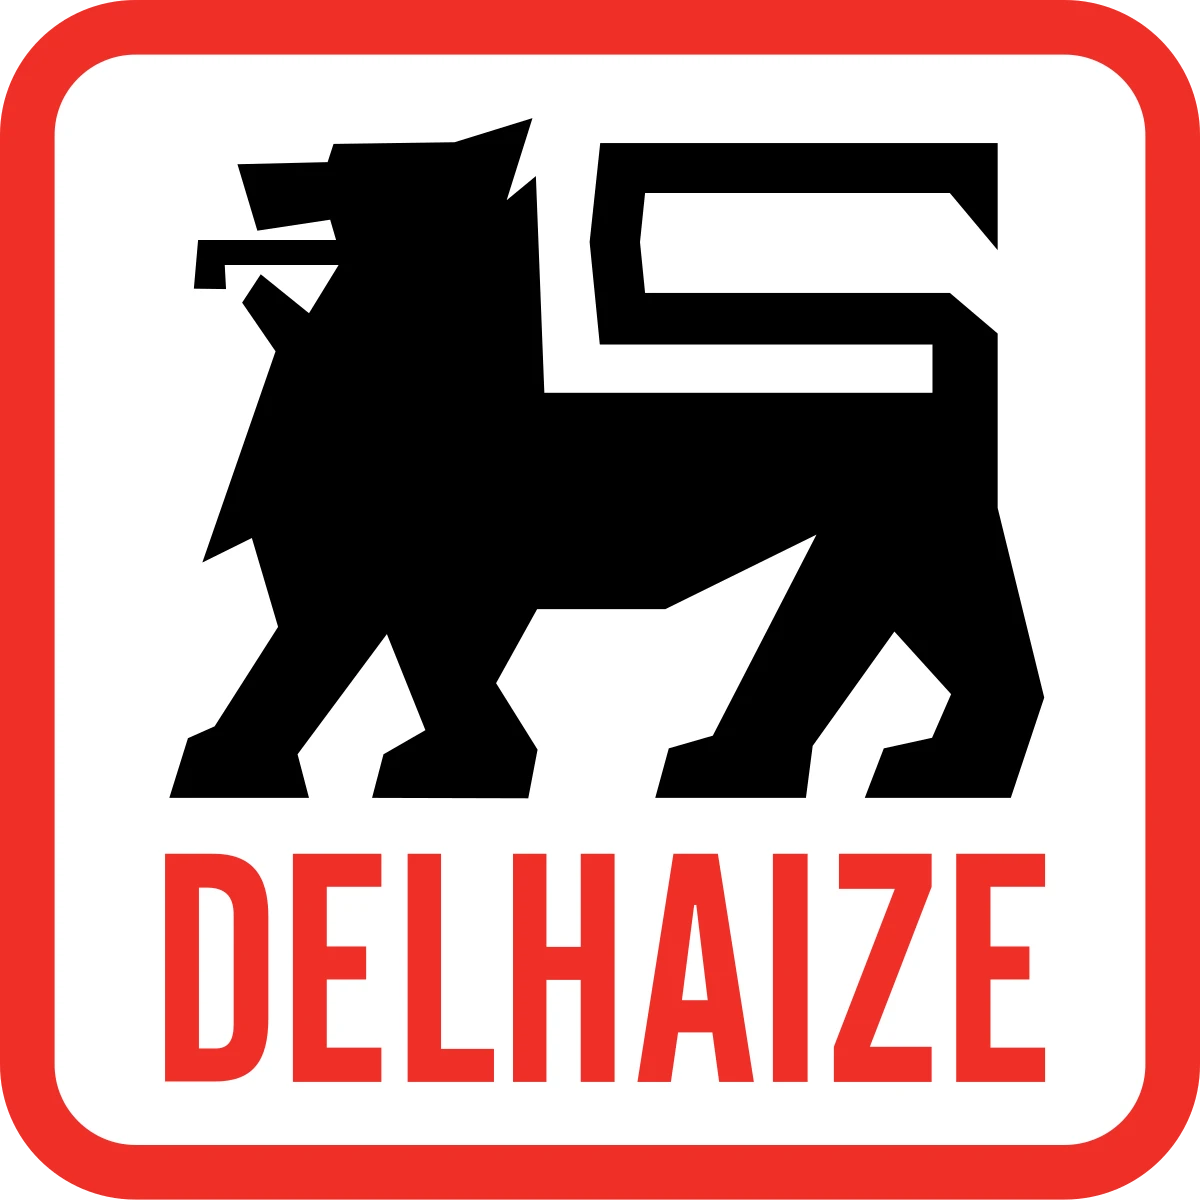 delhaize logo